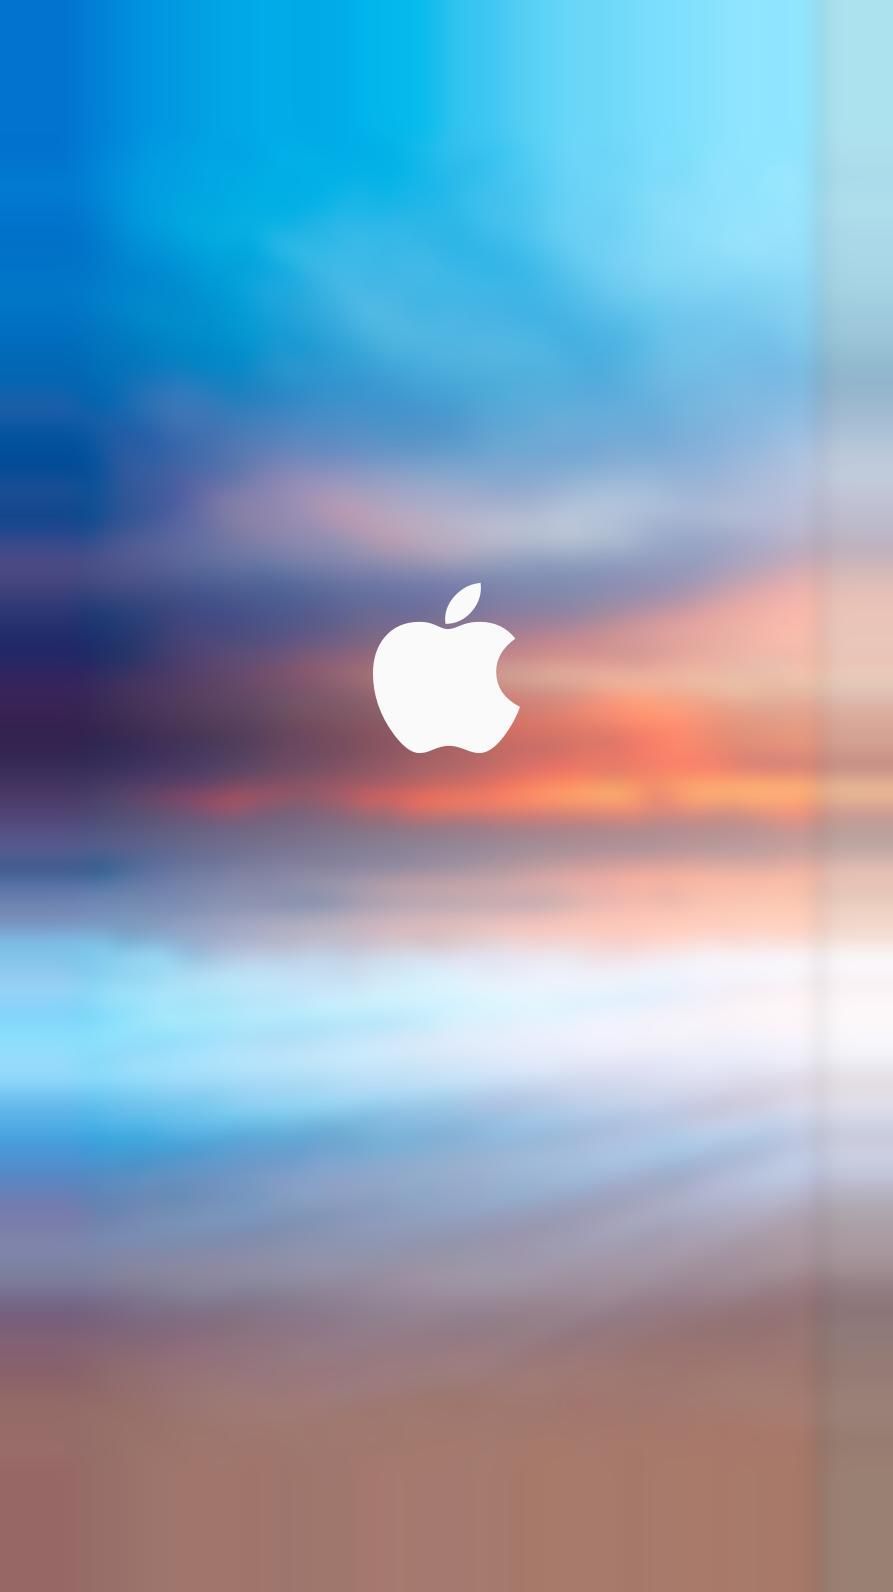 Apple Logo Splash Parallax Turquoise iPhone 7 and iPhone 7 Plus HD Wallpaper. Apple logo wallpaper iphone, iPhone 7 plus wallpaper, iPhone 7 wallpaper